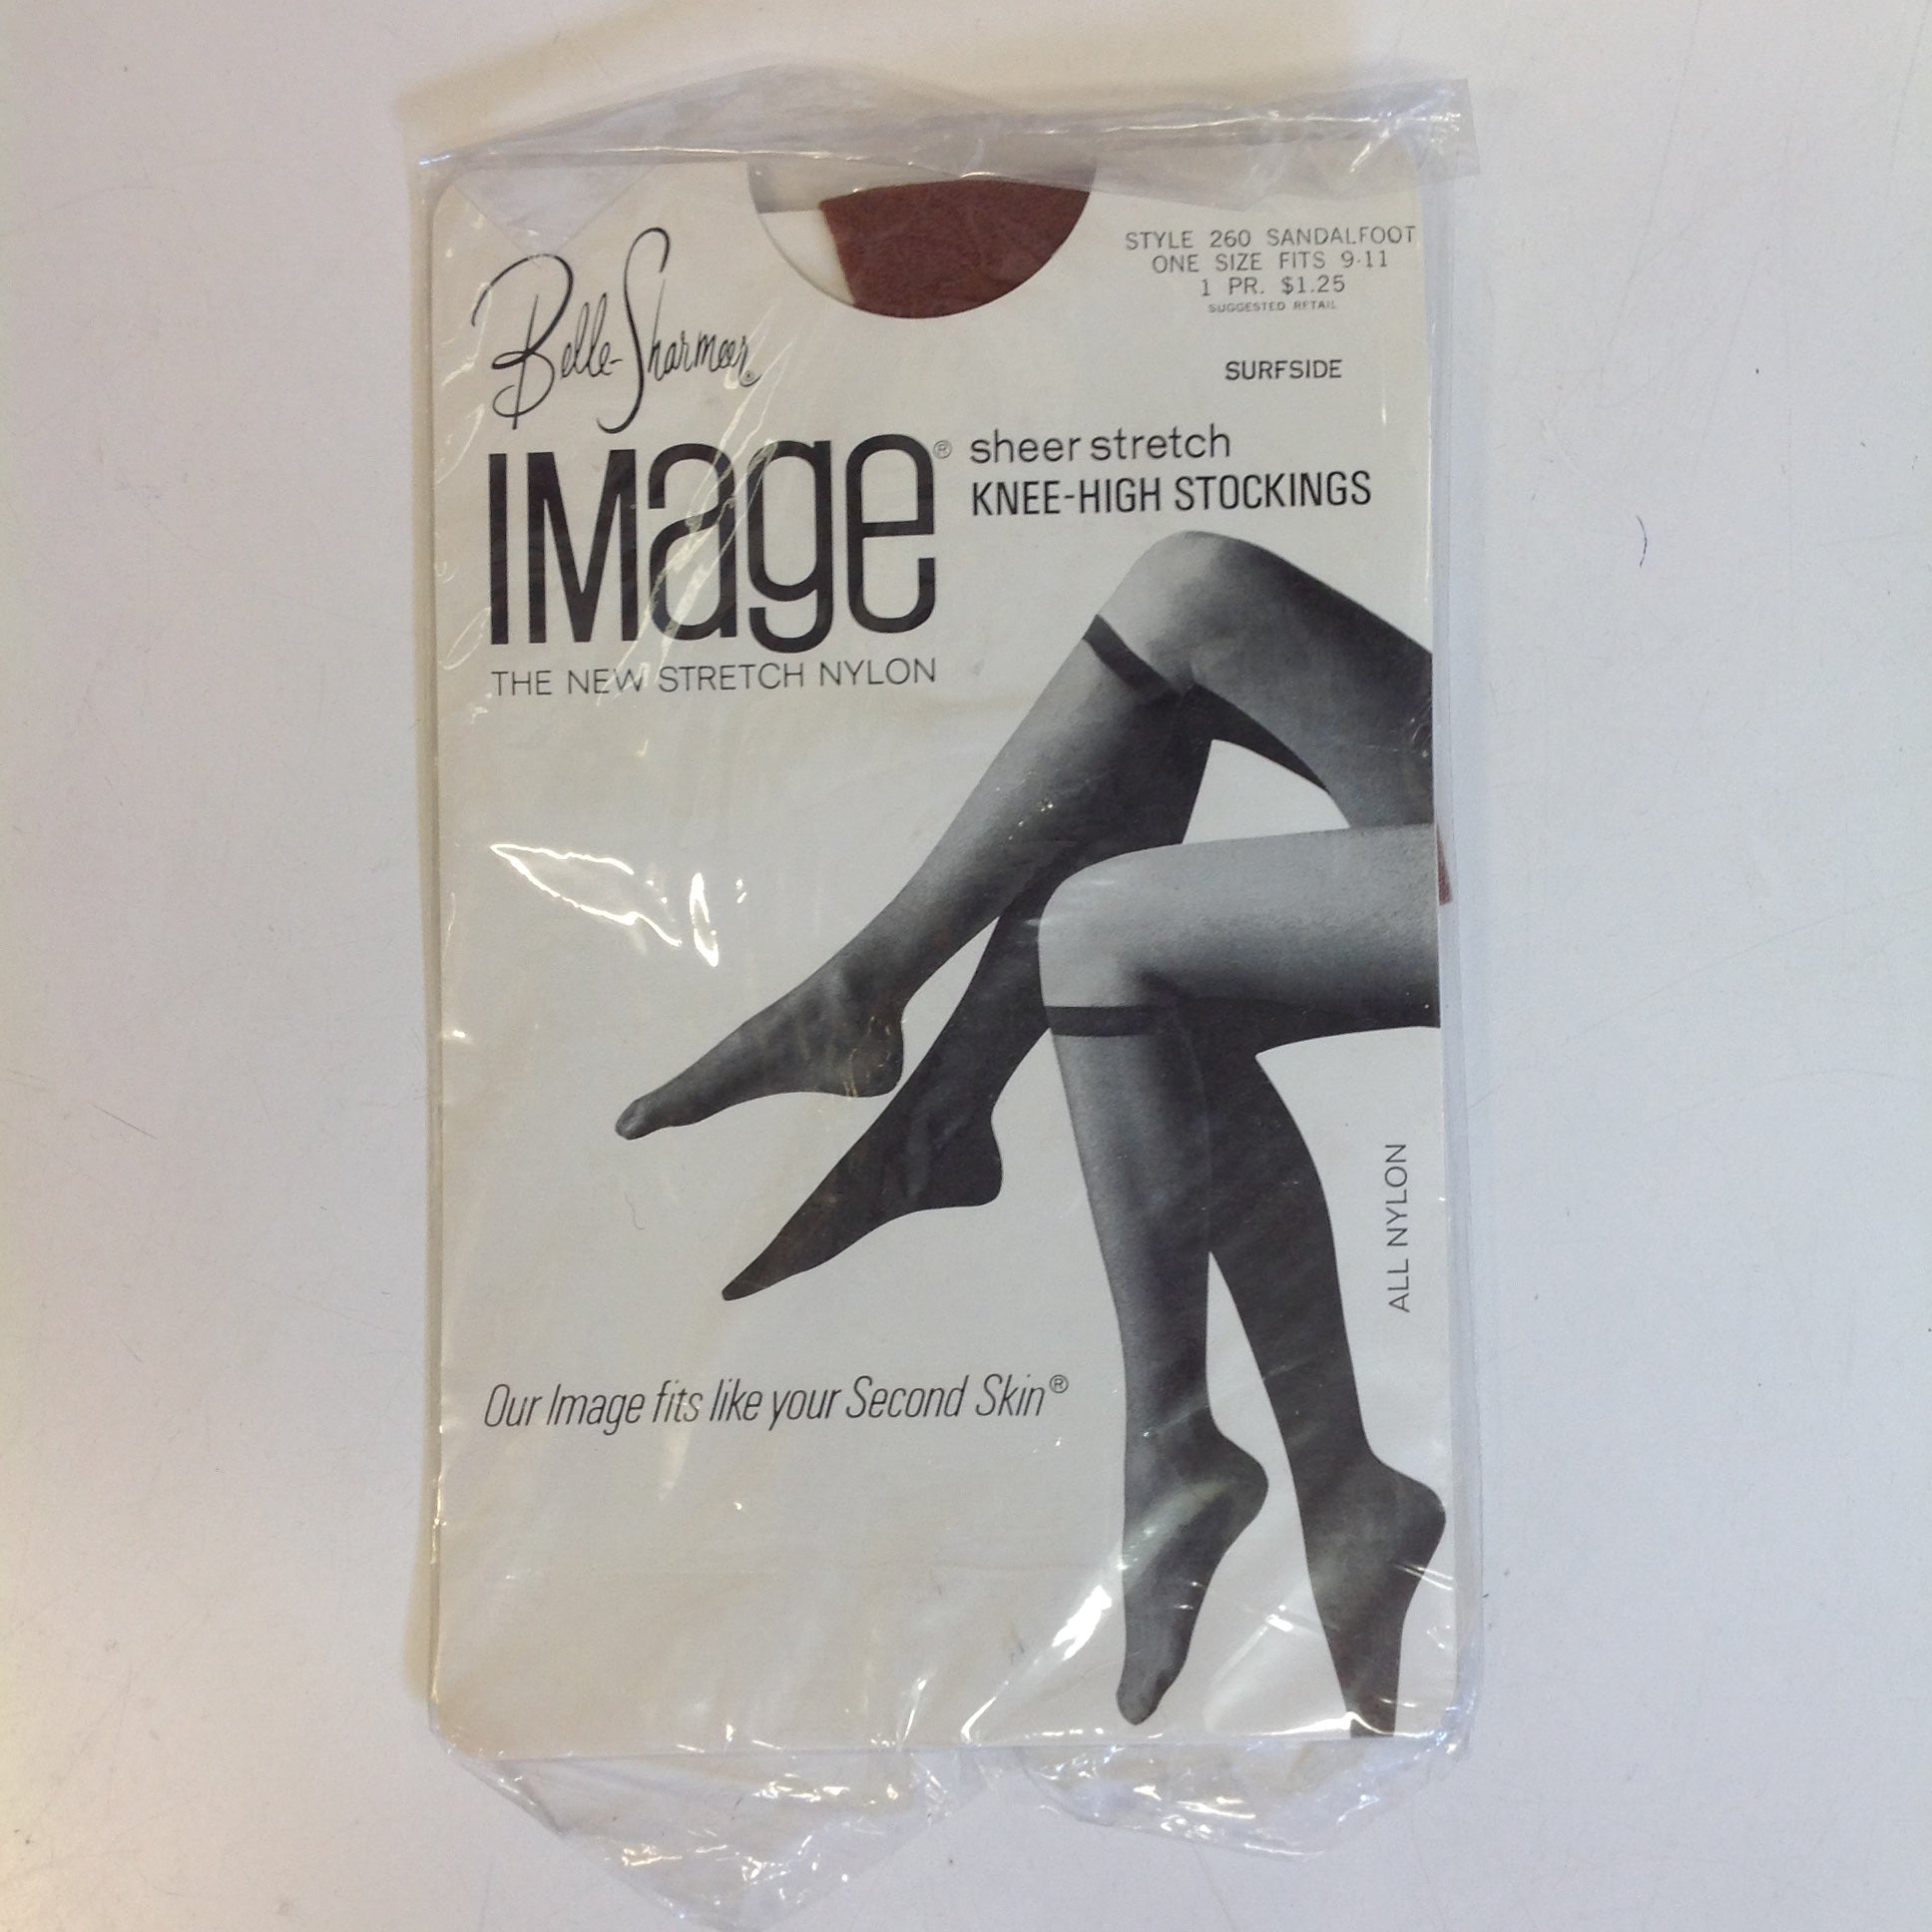 Vintage NOS All Nylon Belle-Sharmeer Image Sheer Stretch Knee-High Stockings Style 260 Sandalfoot Surfside Size 9-11